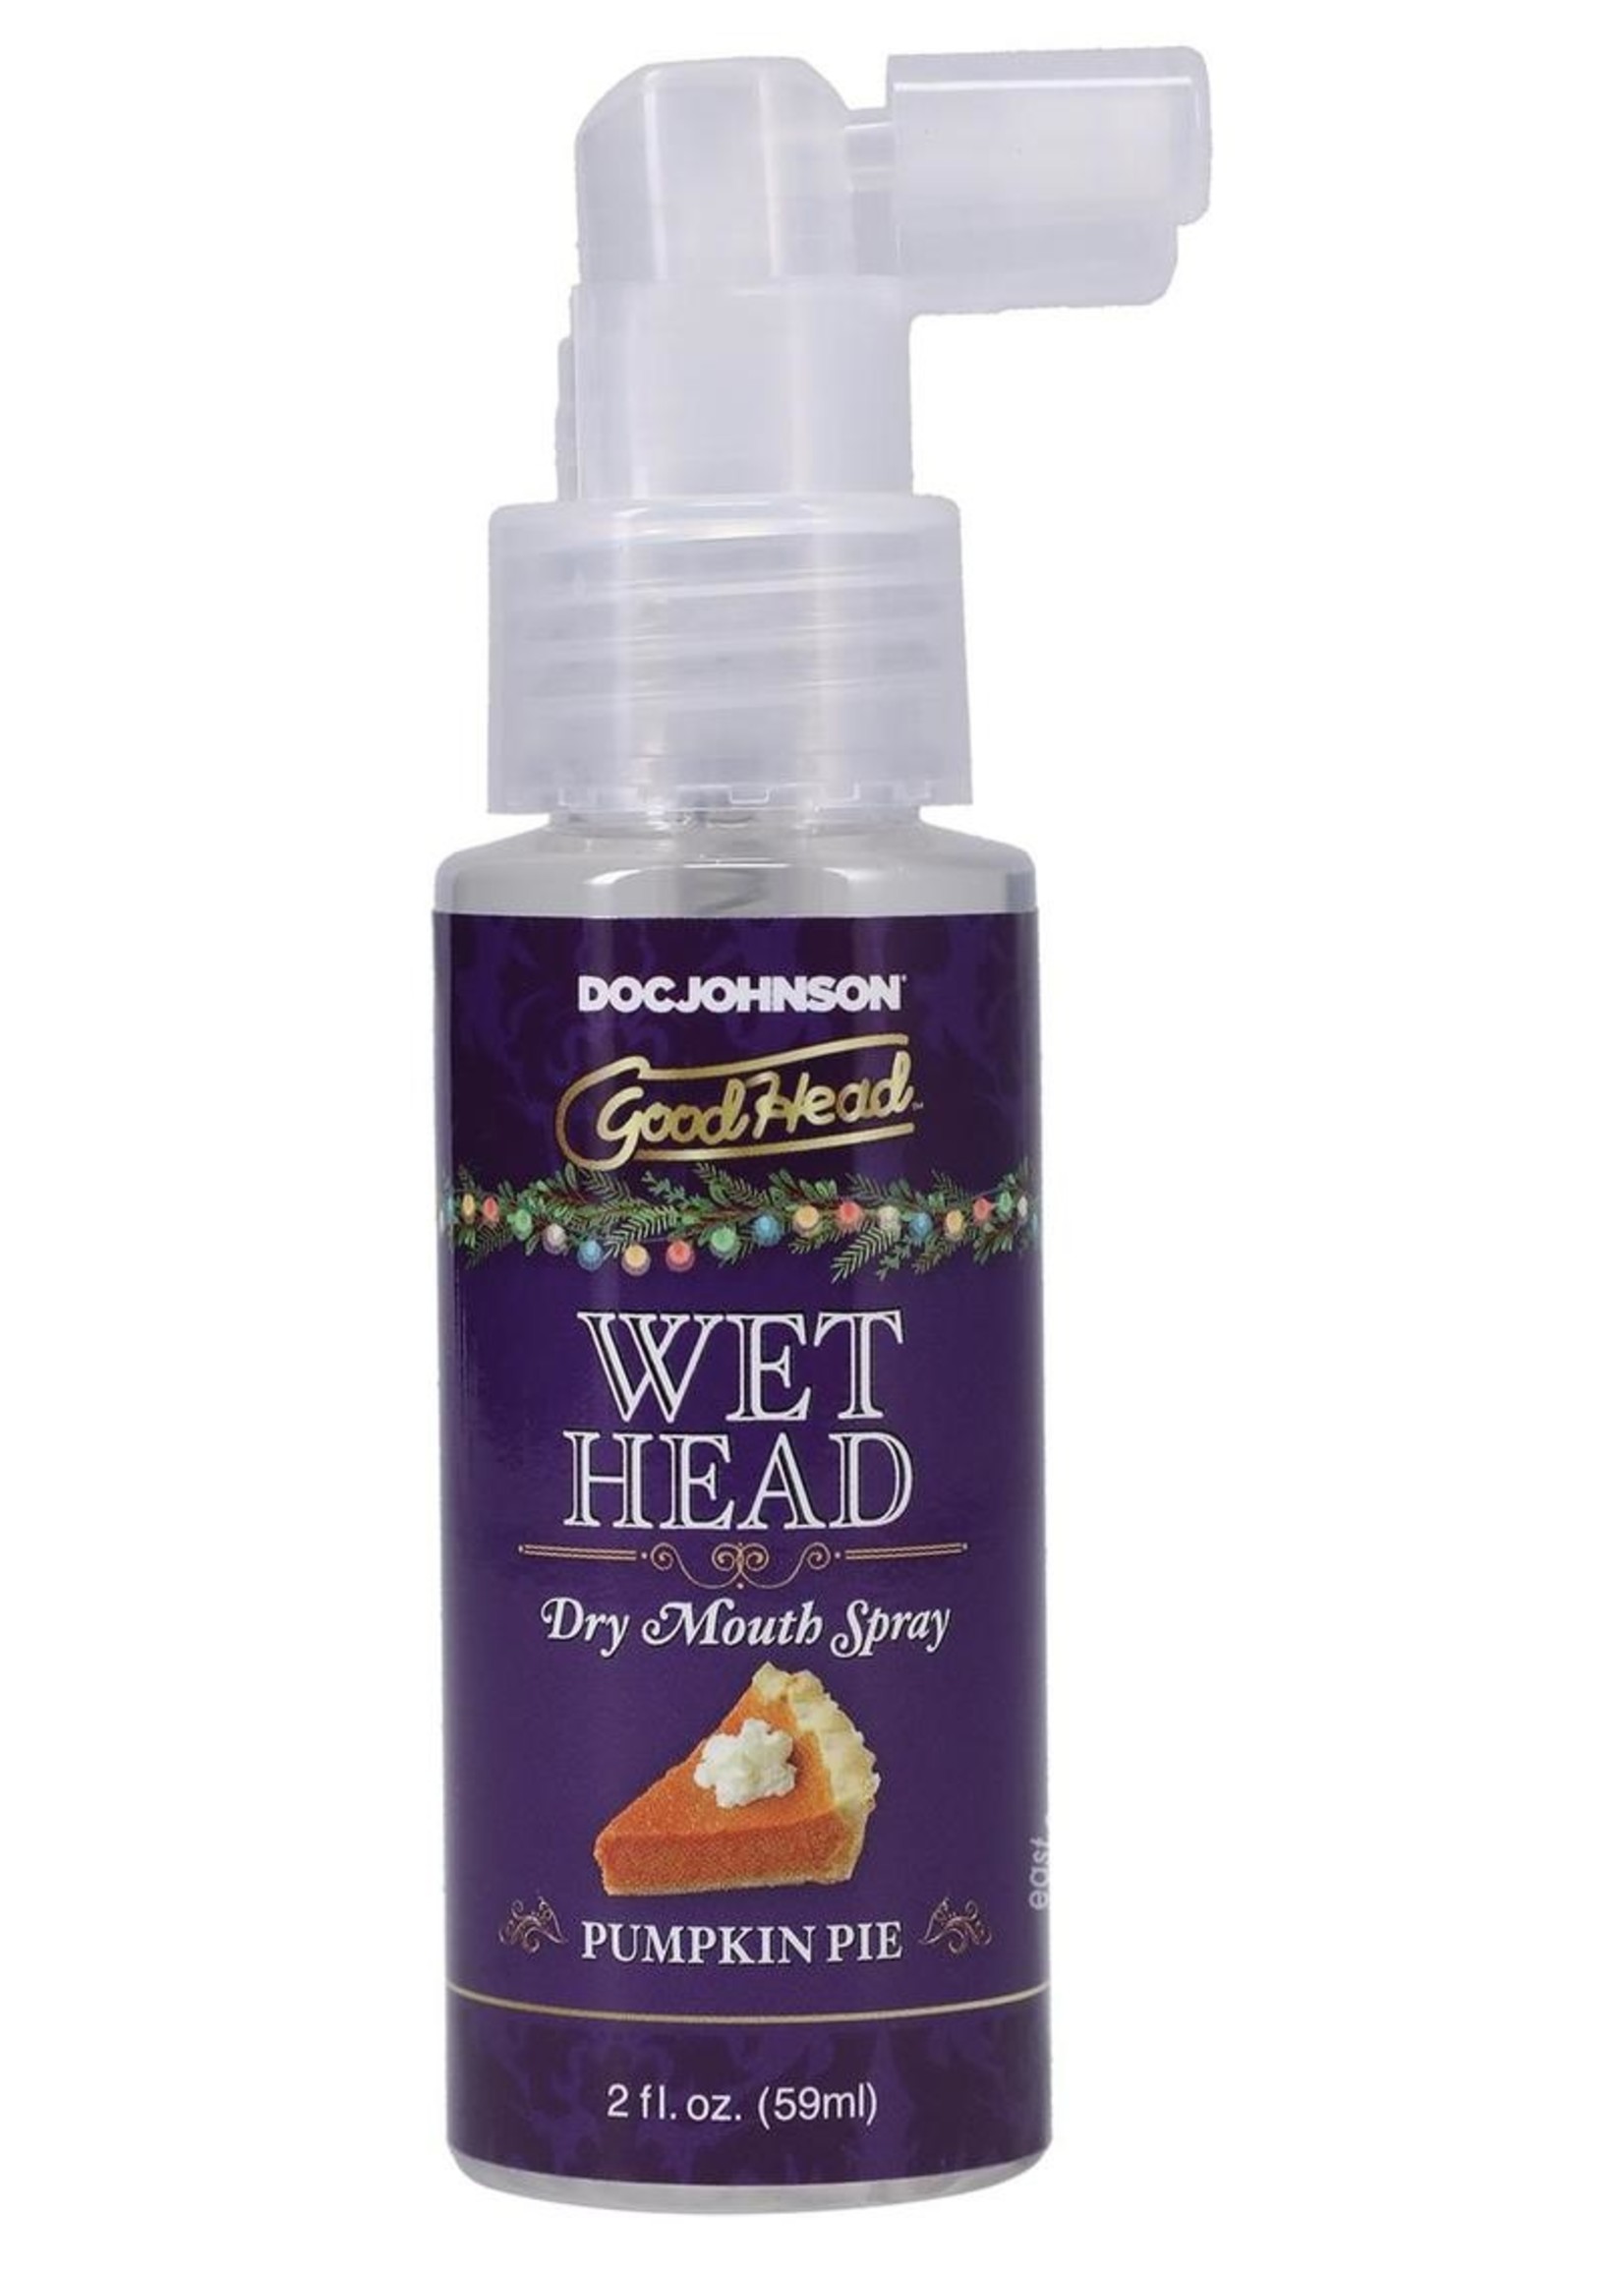 GoodHead Holiday Wet Head Dry Mouth Spray 2oz - Pumpkin Pie